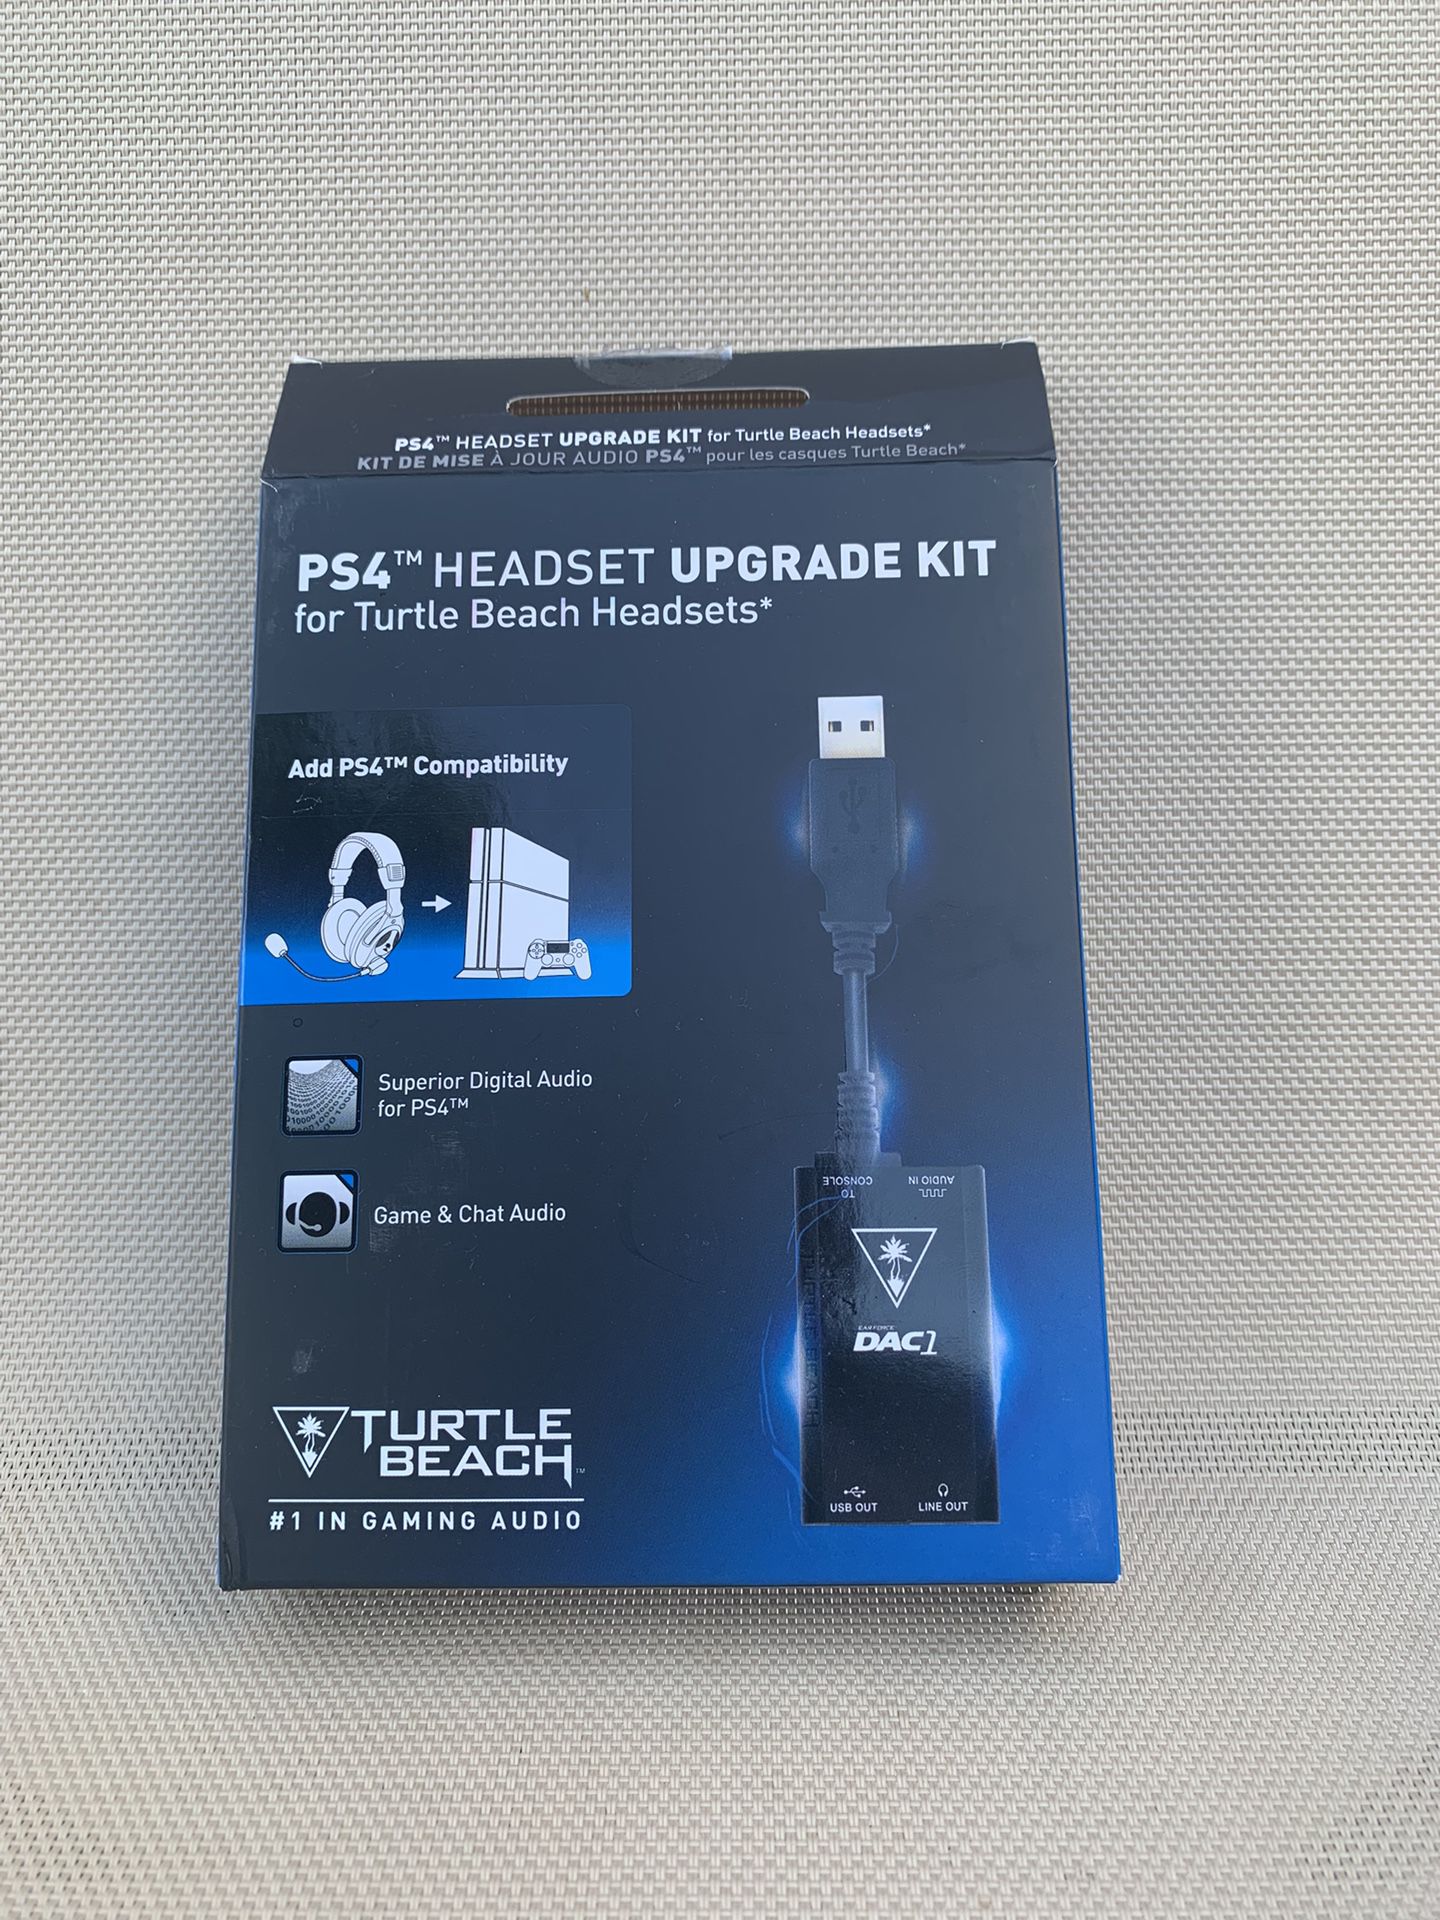 PS4 Headset Upgrade Kit (Turtle Beach)